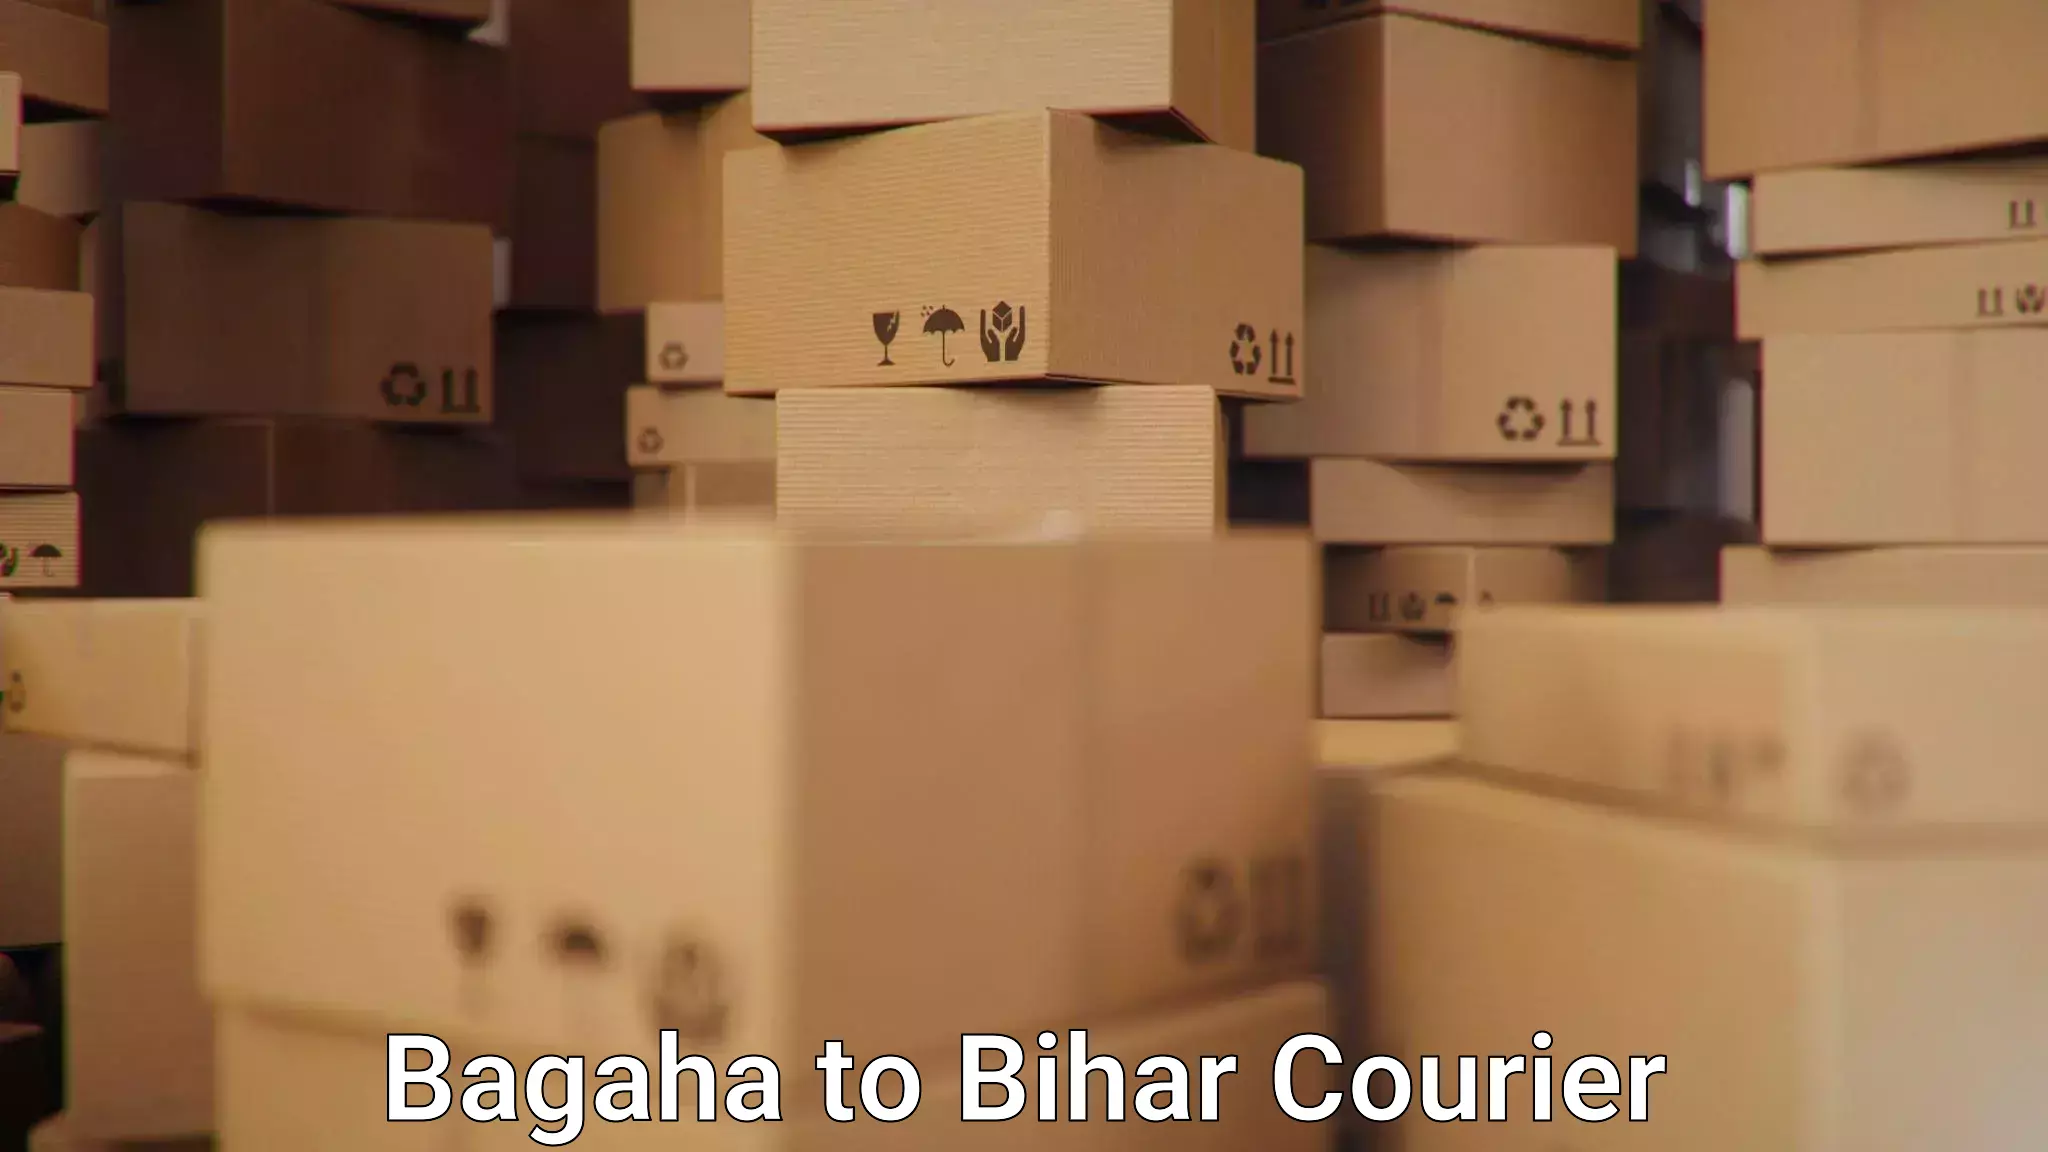 Next-day freight services Bagaha to Dhaka